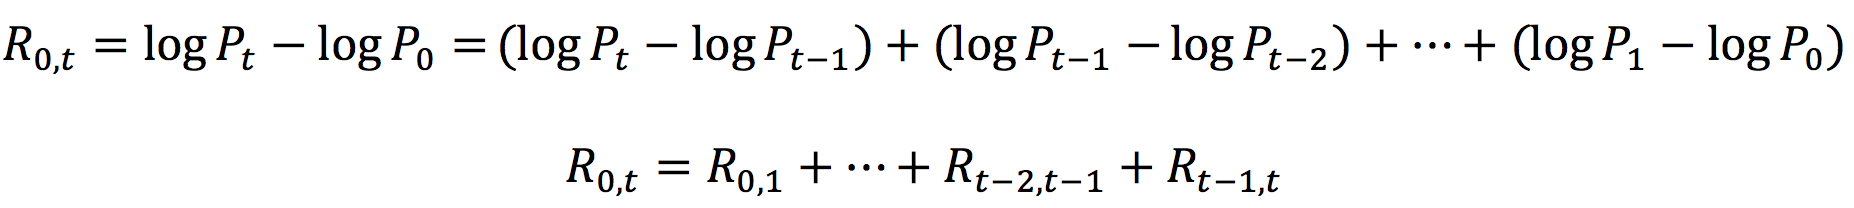 Logarithmic returns additivity